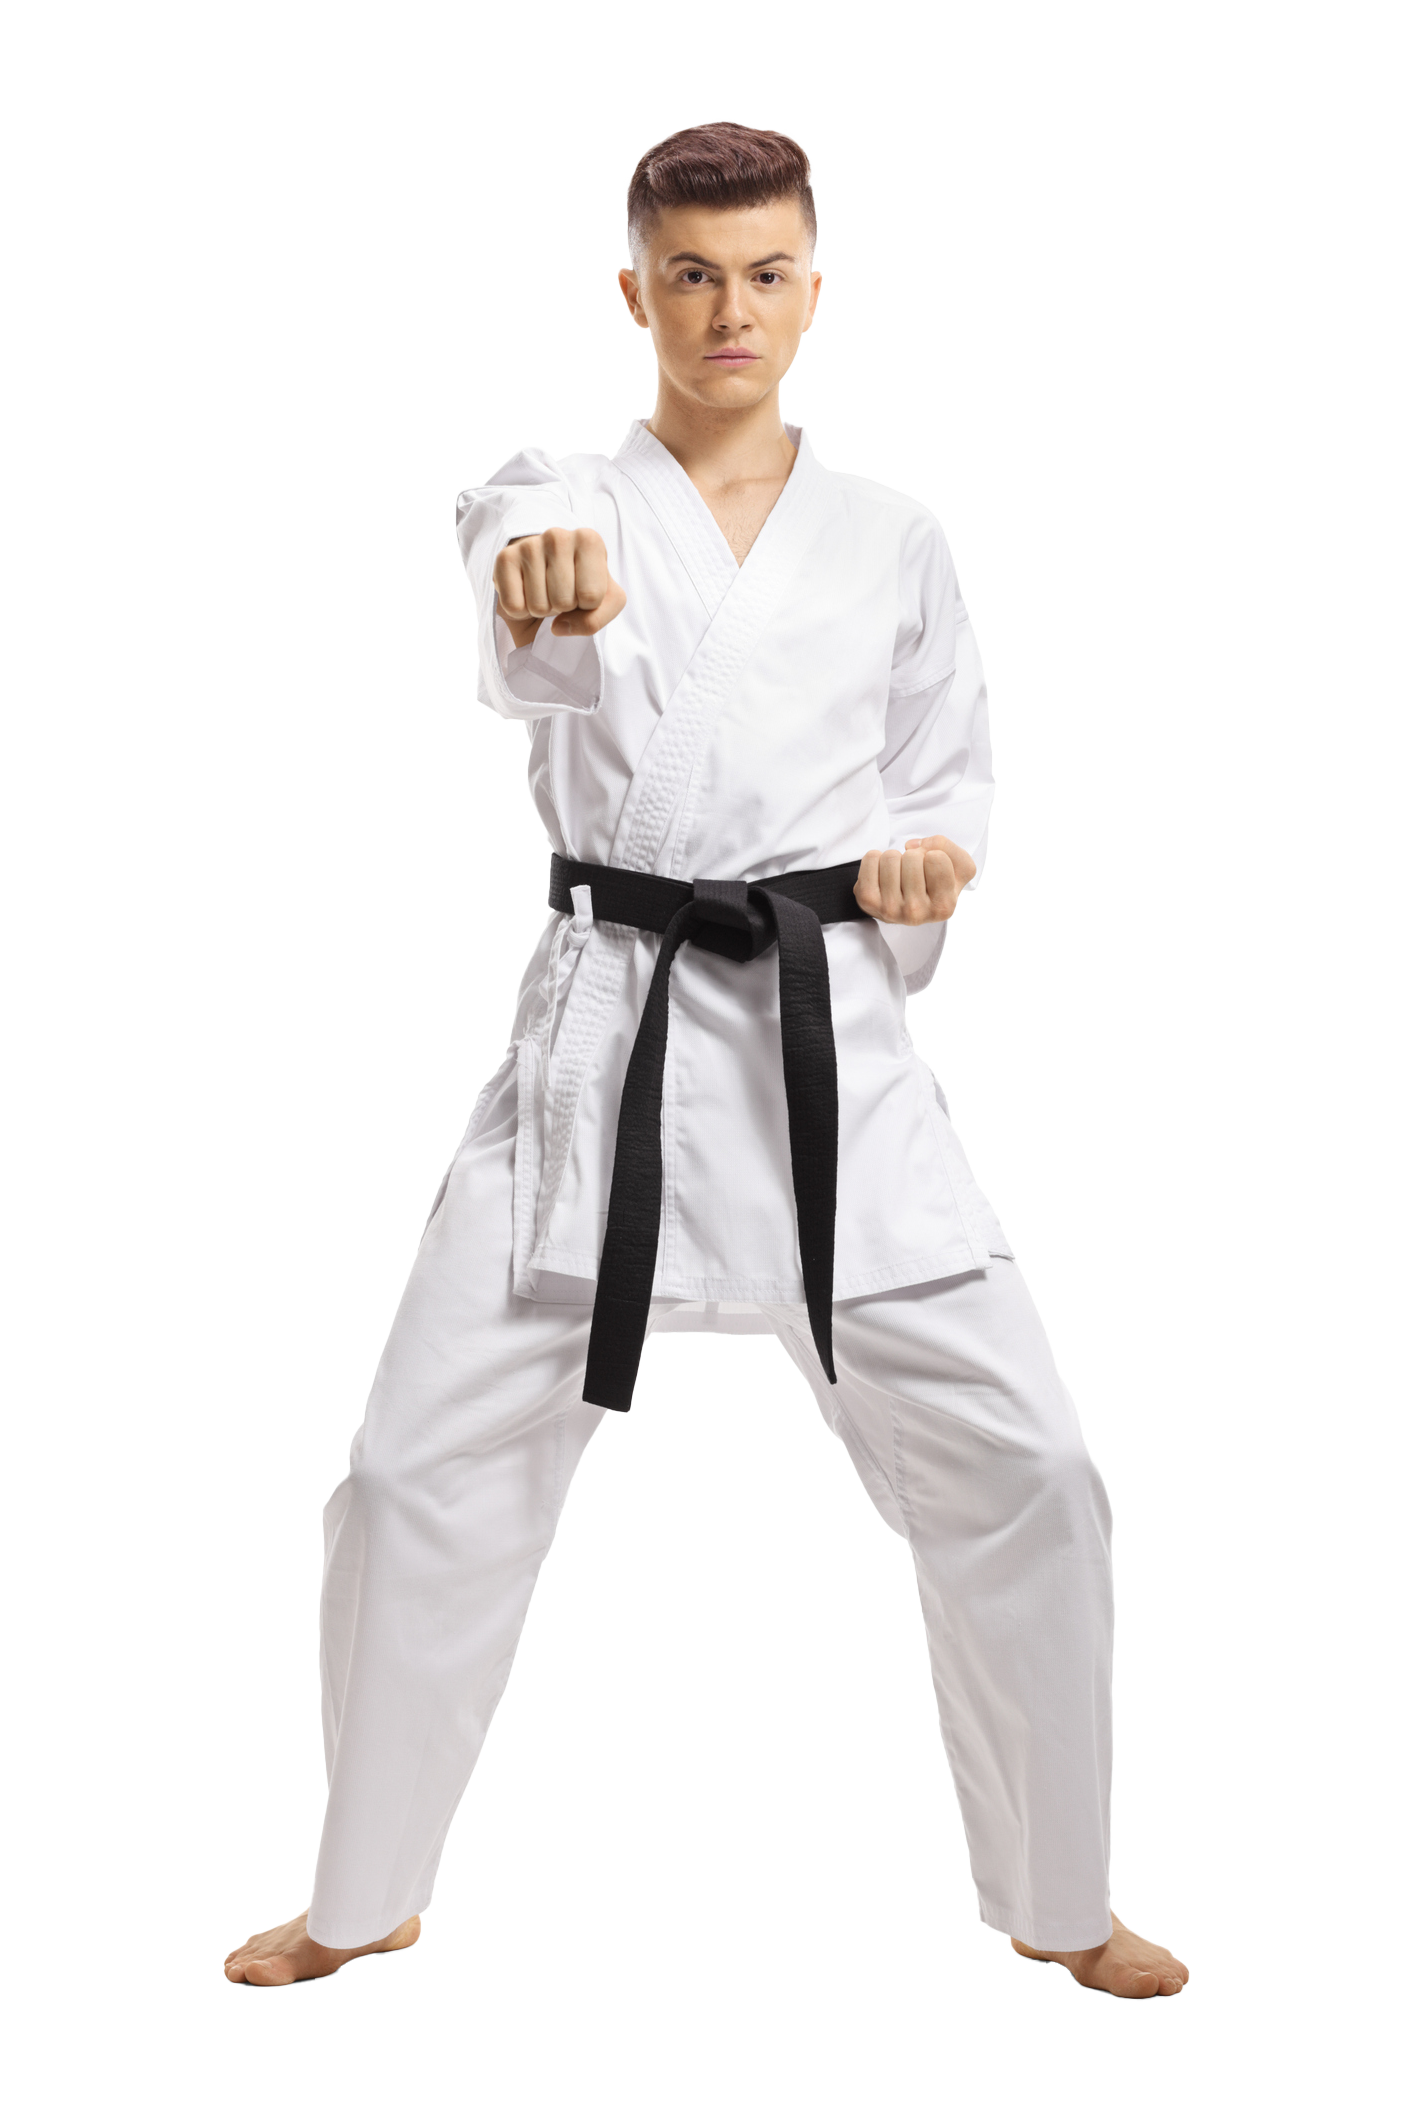 Young Man in Karate Uniform - Mason, OH - Mason Karate Fitness 